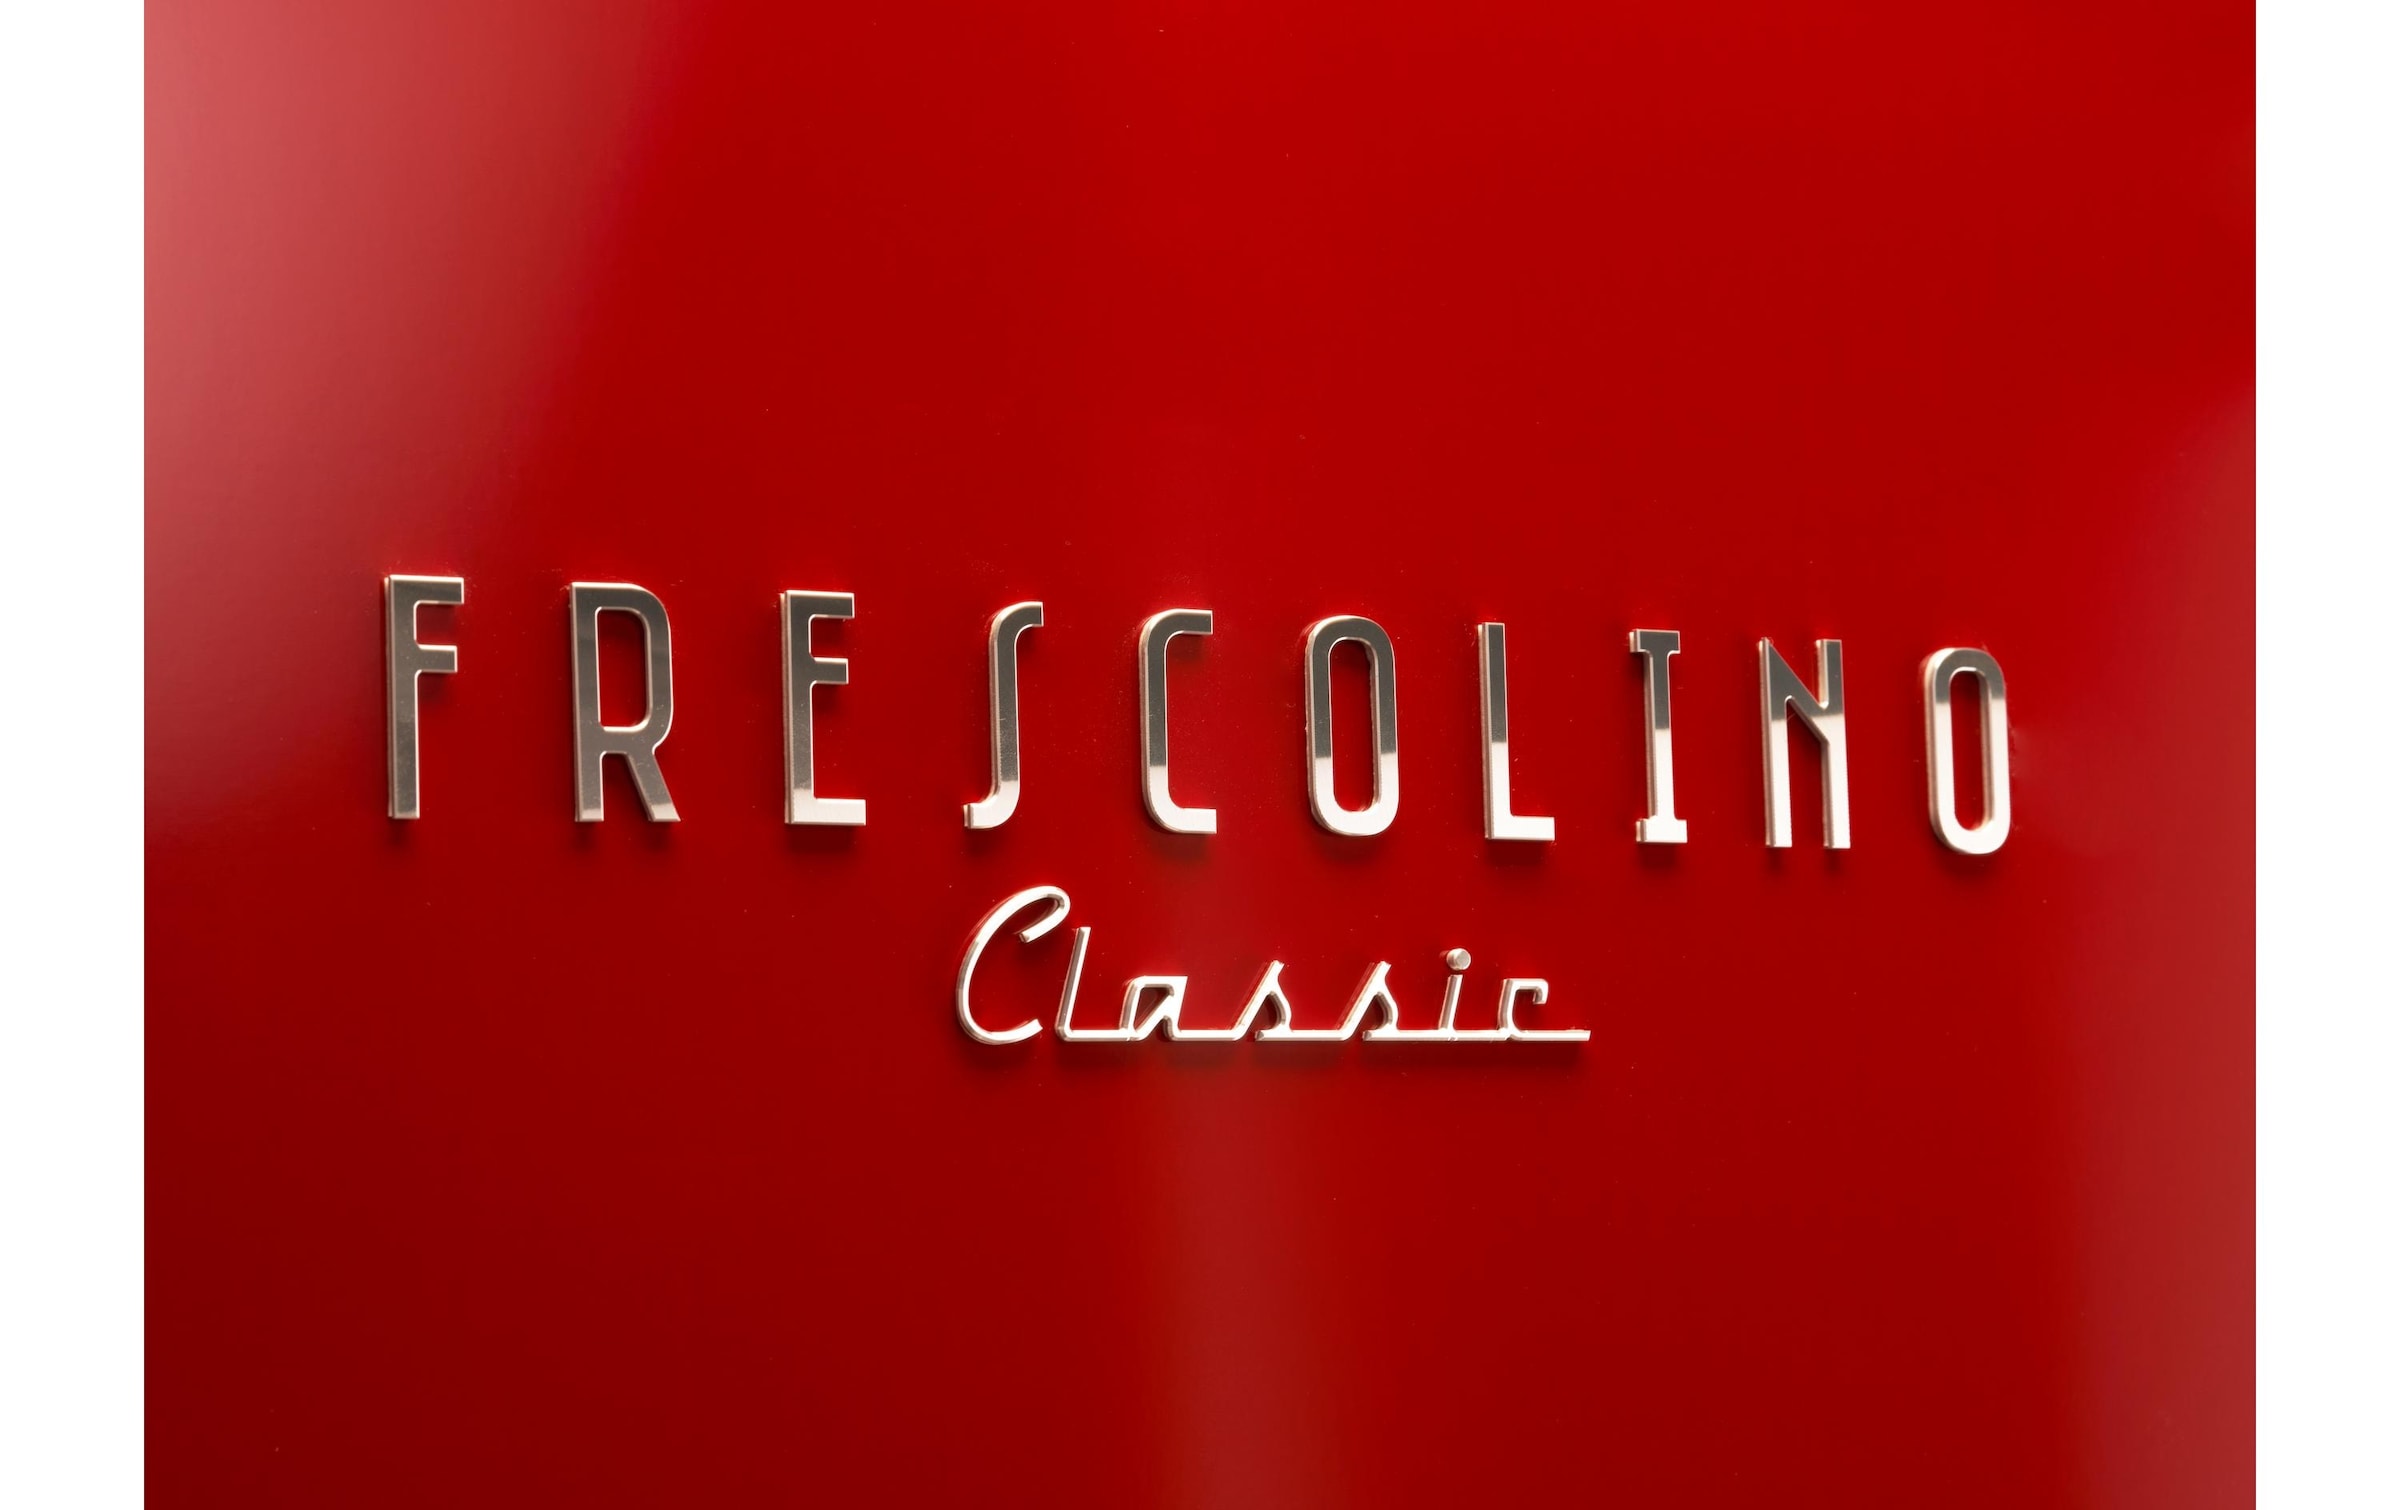 Trisa Kühl-/Gefrierkombination »Frescolino Classic 300«, Frescolino Classic 300, 192 cm hoch, 59,9 cm breit